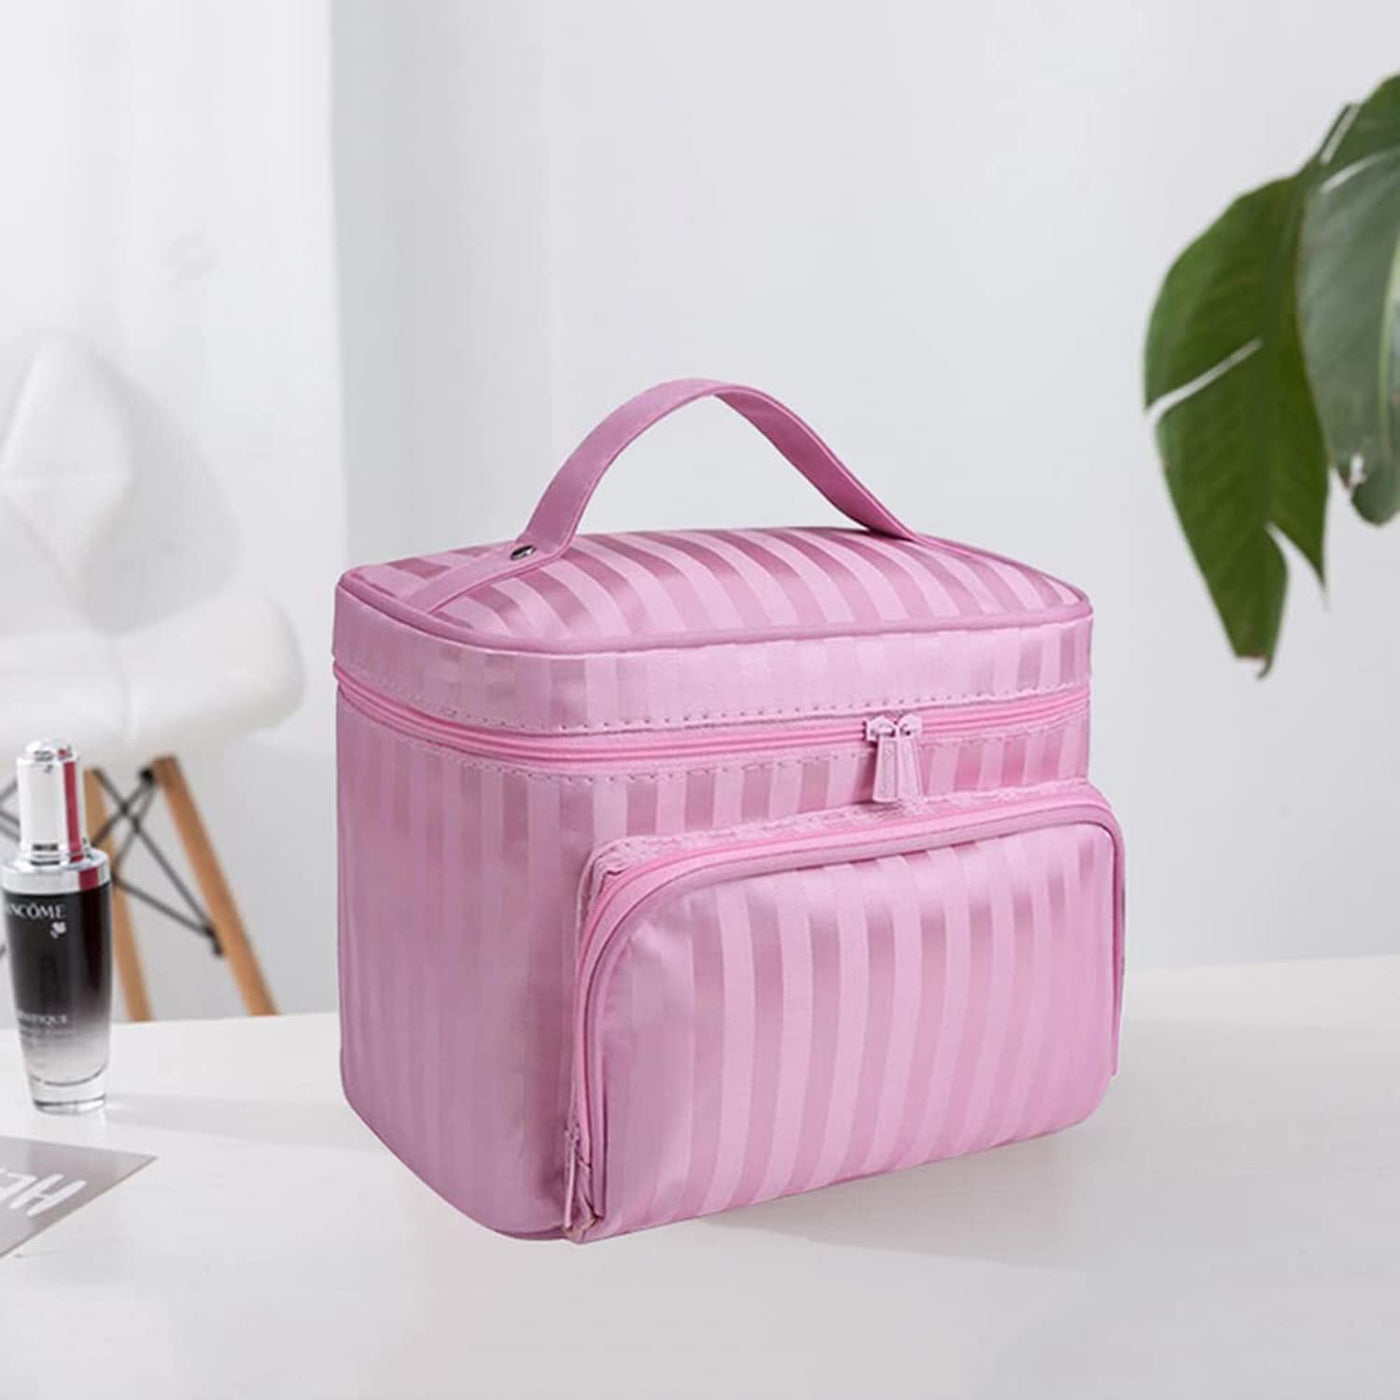 Travel Makeup Bag Large Cosmetic Bags with Brush Holder Make-up Bag Organizer Multifunction Bag for Women Girls